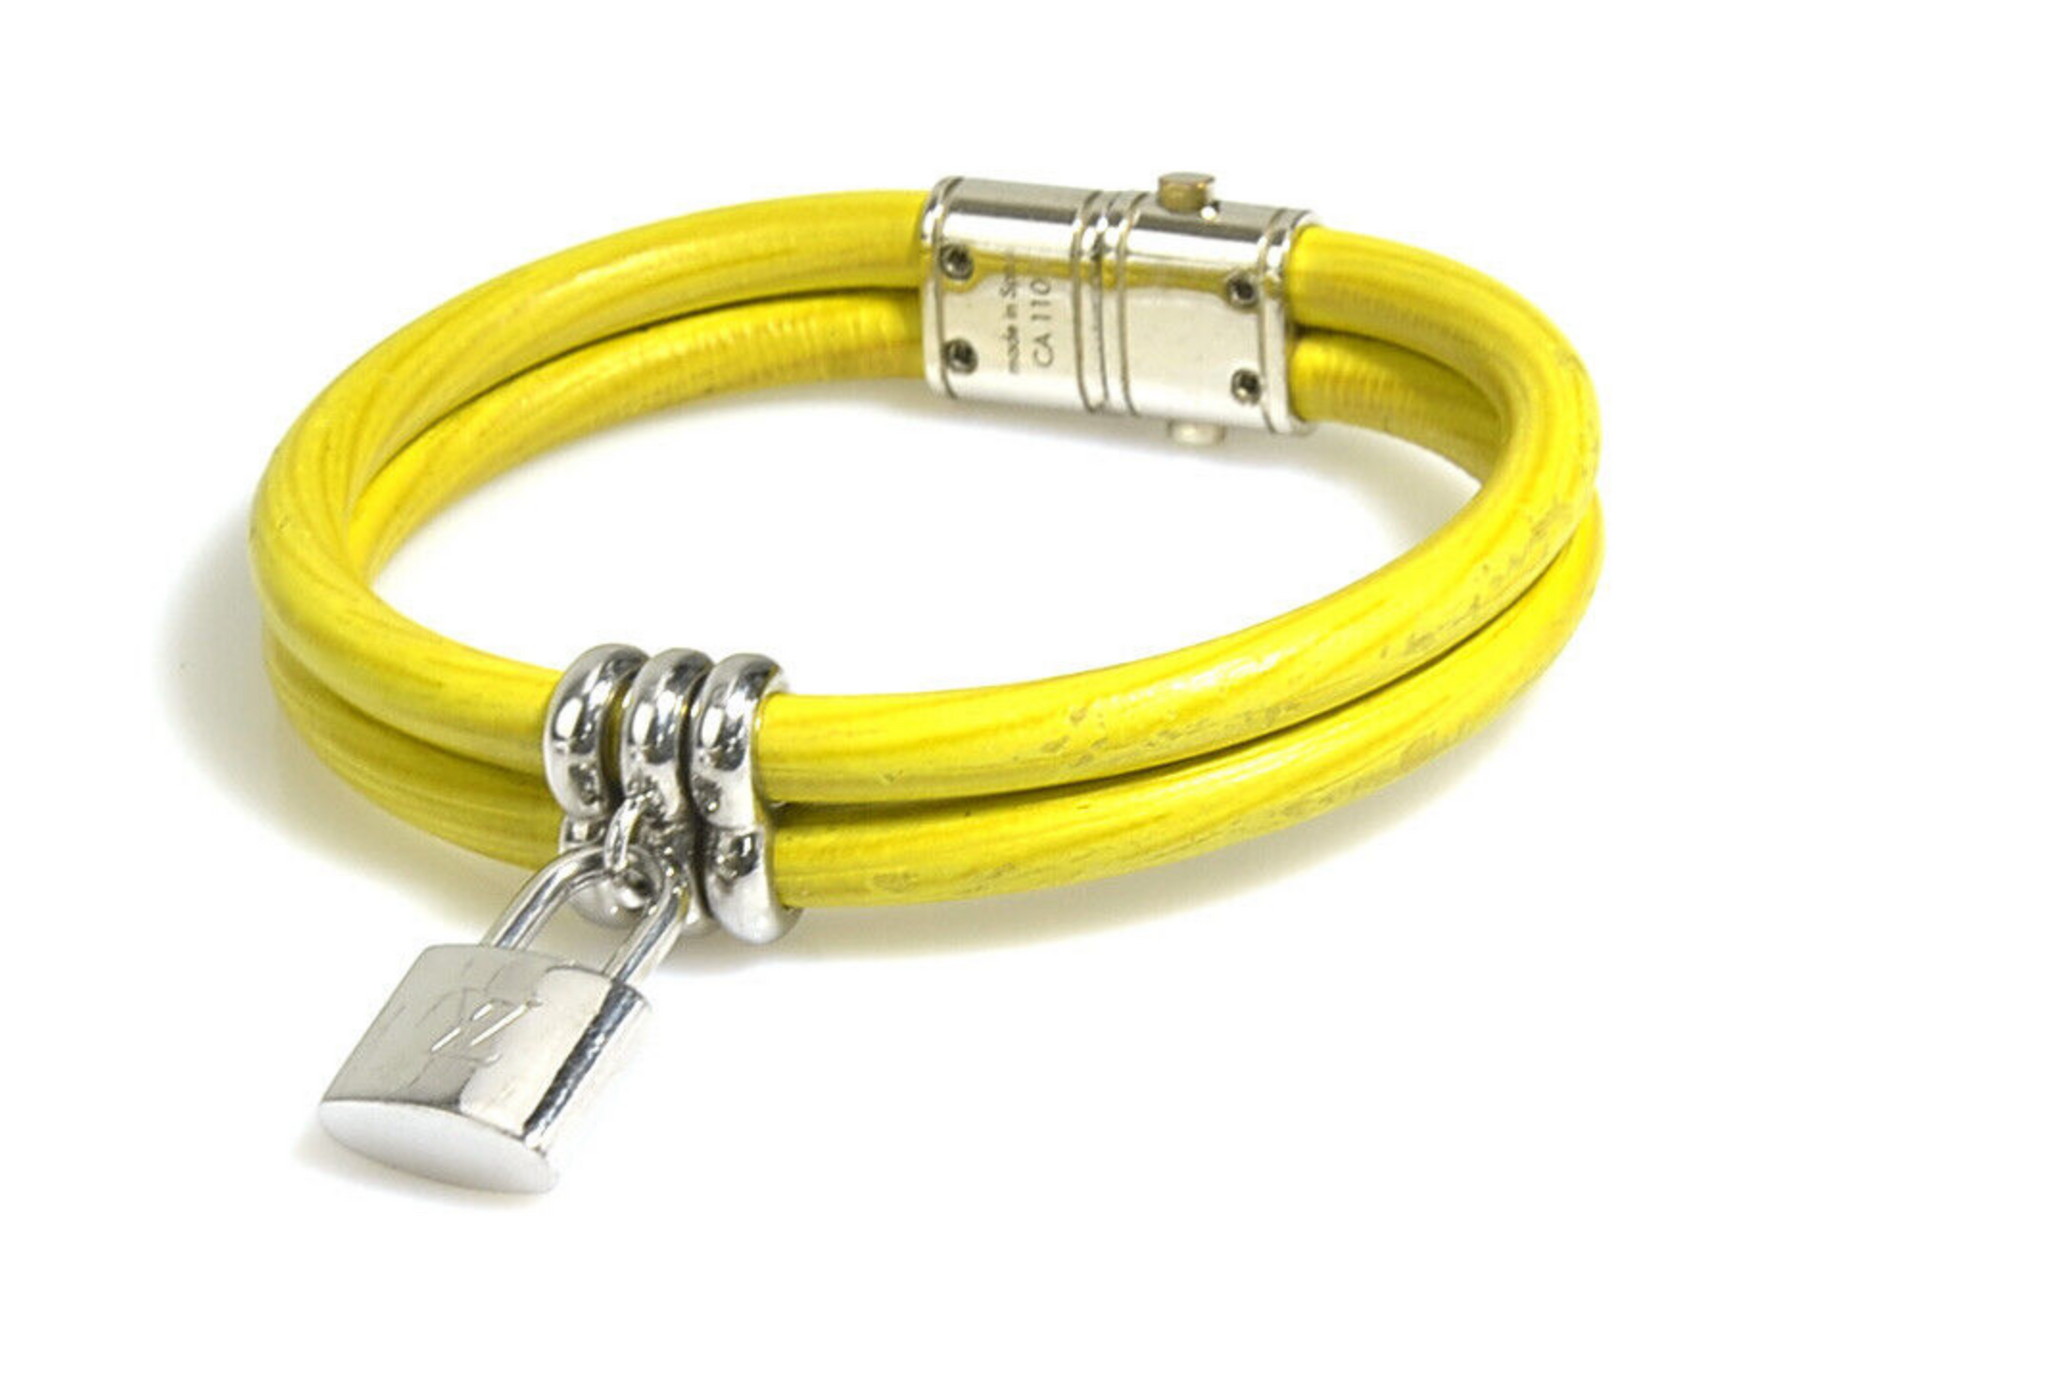 Louis Vuitton Keep It Twice Monogram Bracelet